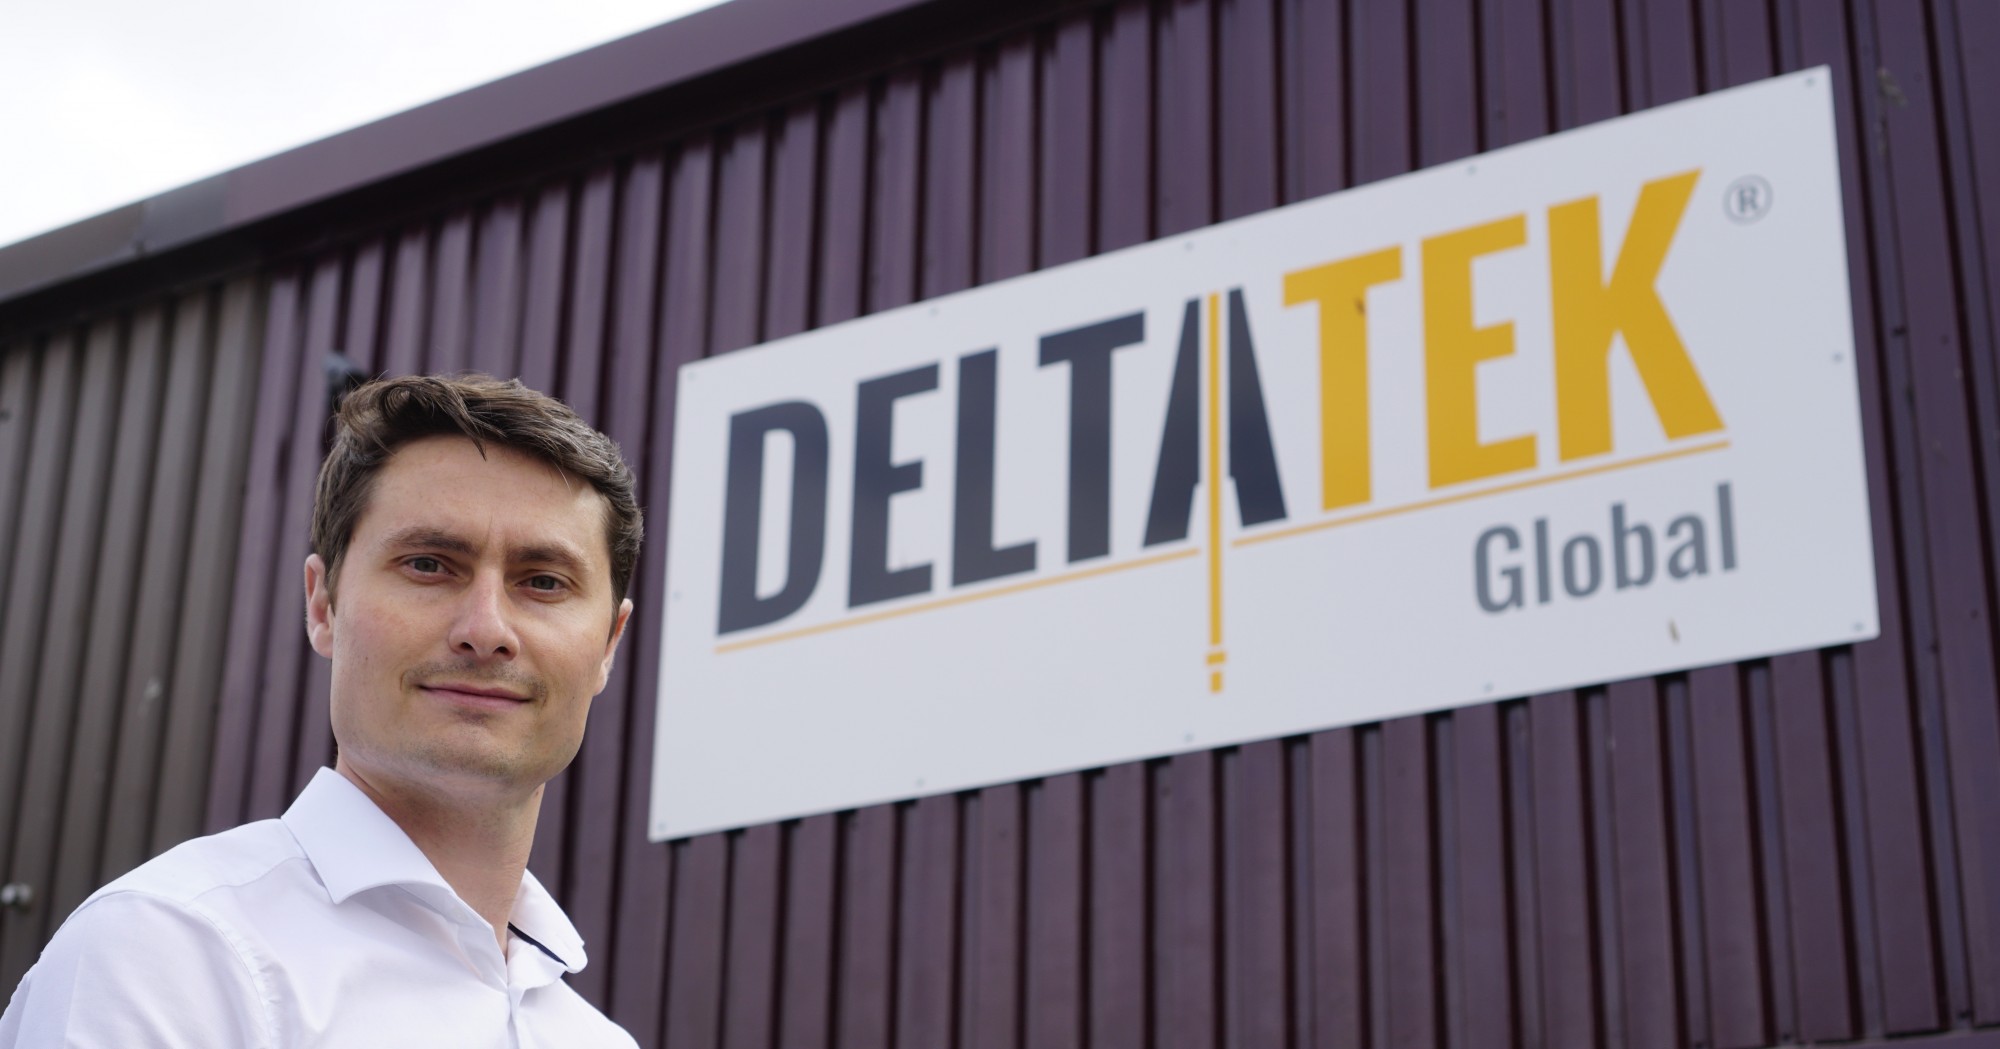 DeltaTek develops pioneering subsea cement system - Interview with Tristam Horn